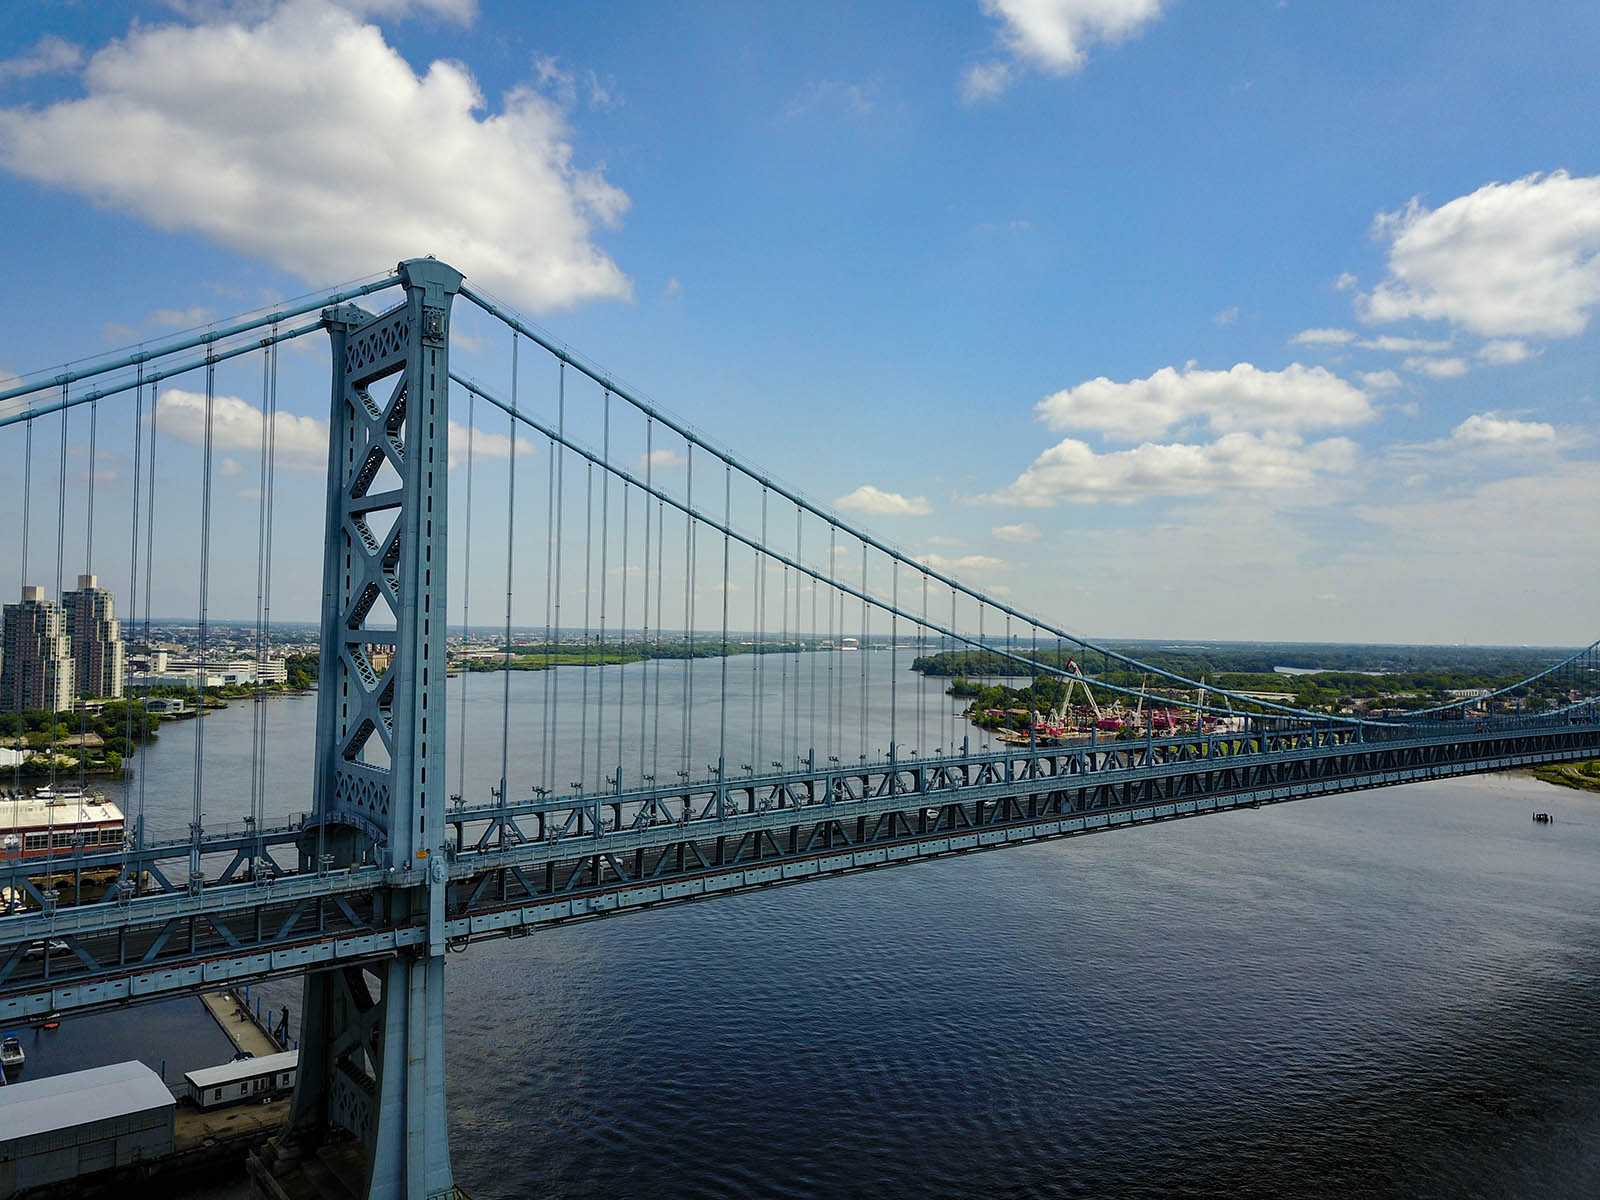 A suspension bridge across the Delaware River connecting Philadelphia, Pennsylvania, and Camden, New Jersey.